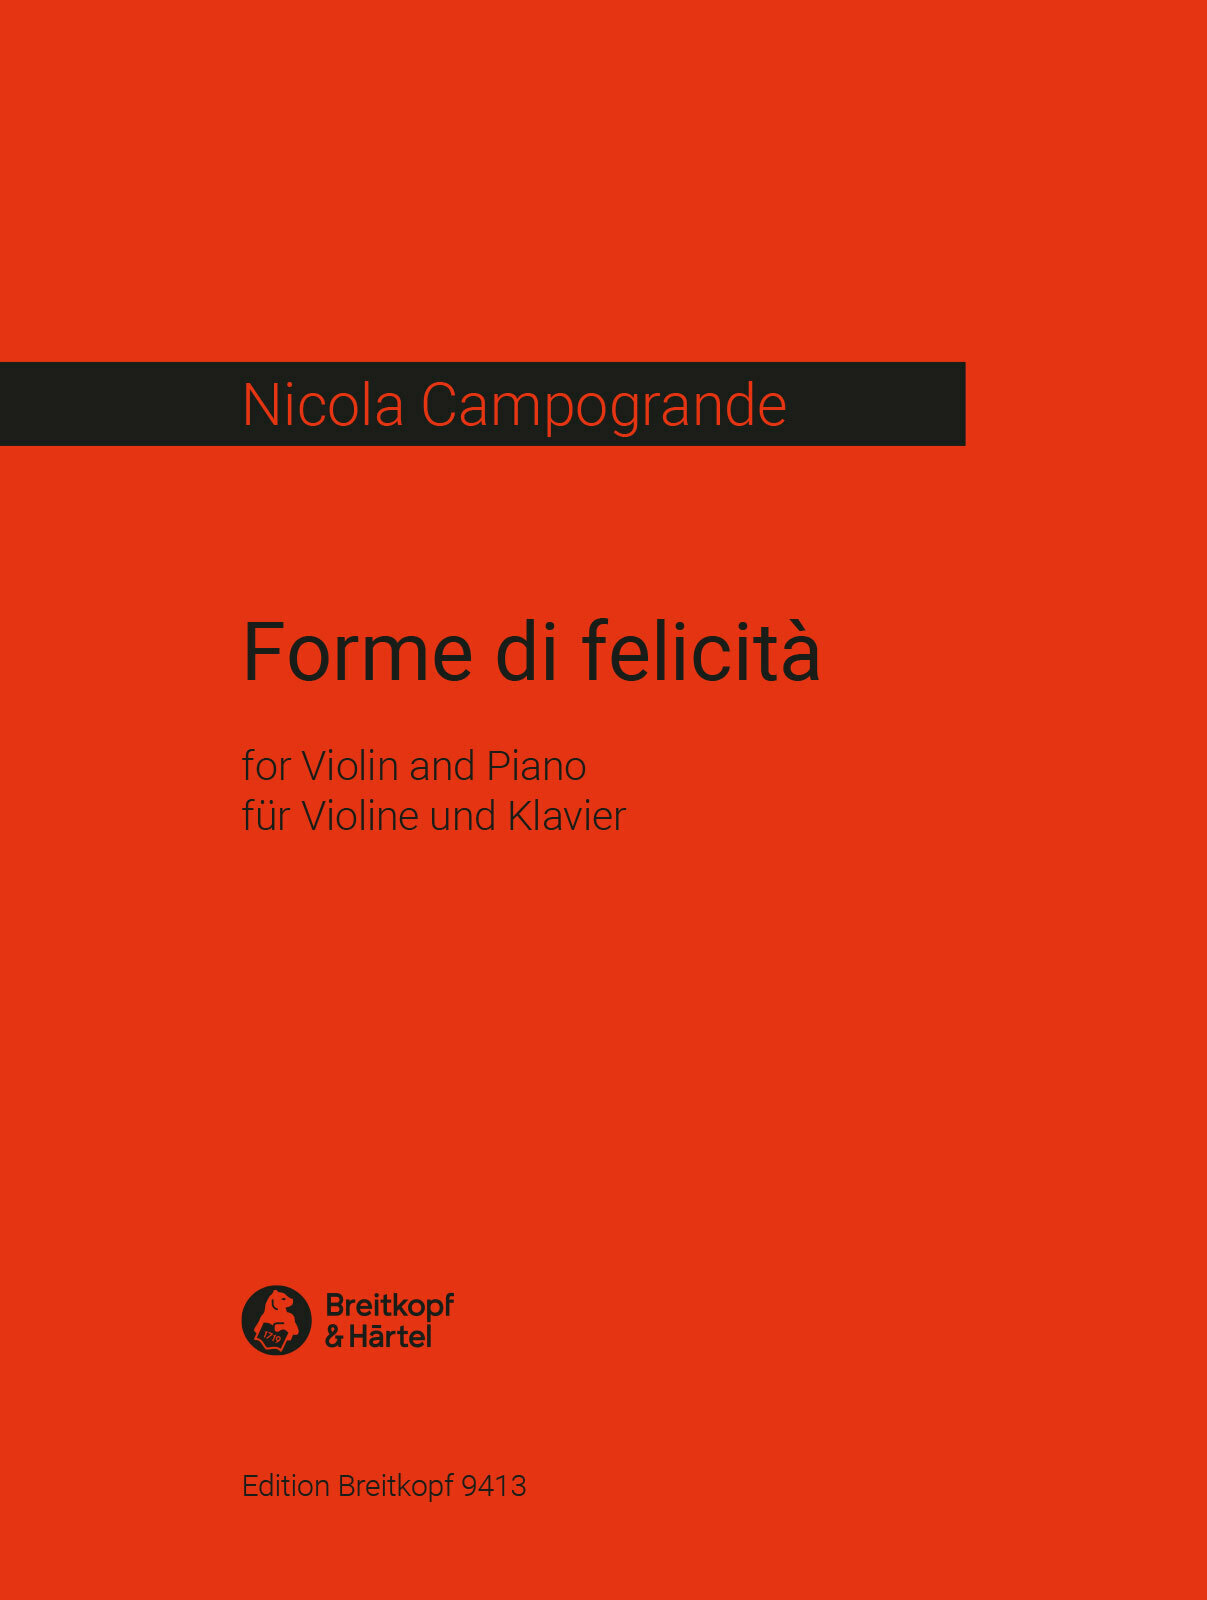 Campogrande Forme Di Felicita Violin & Piano Sheet Music Songbook